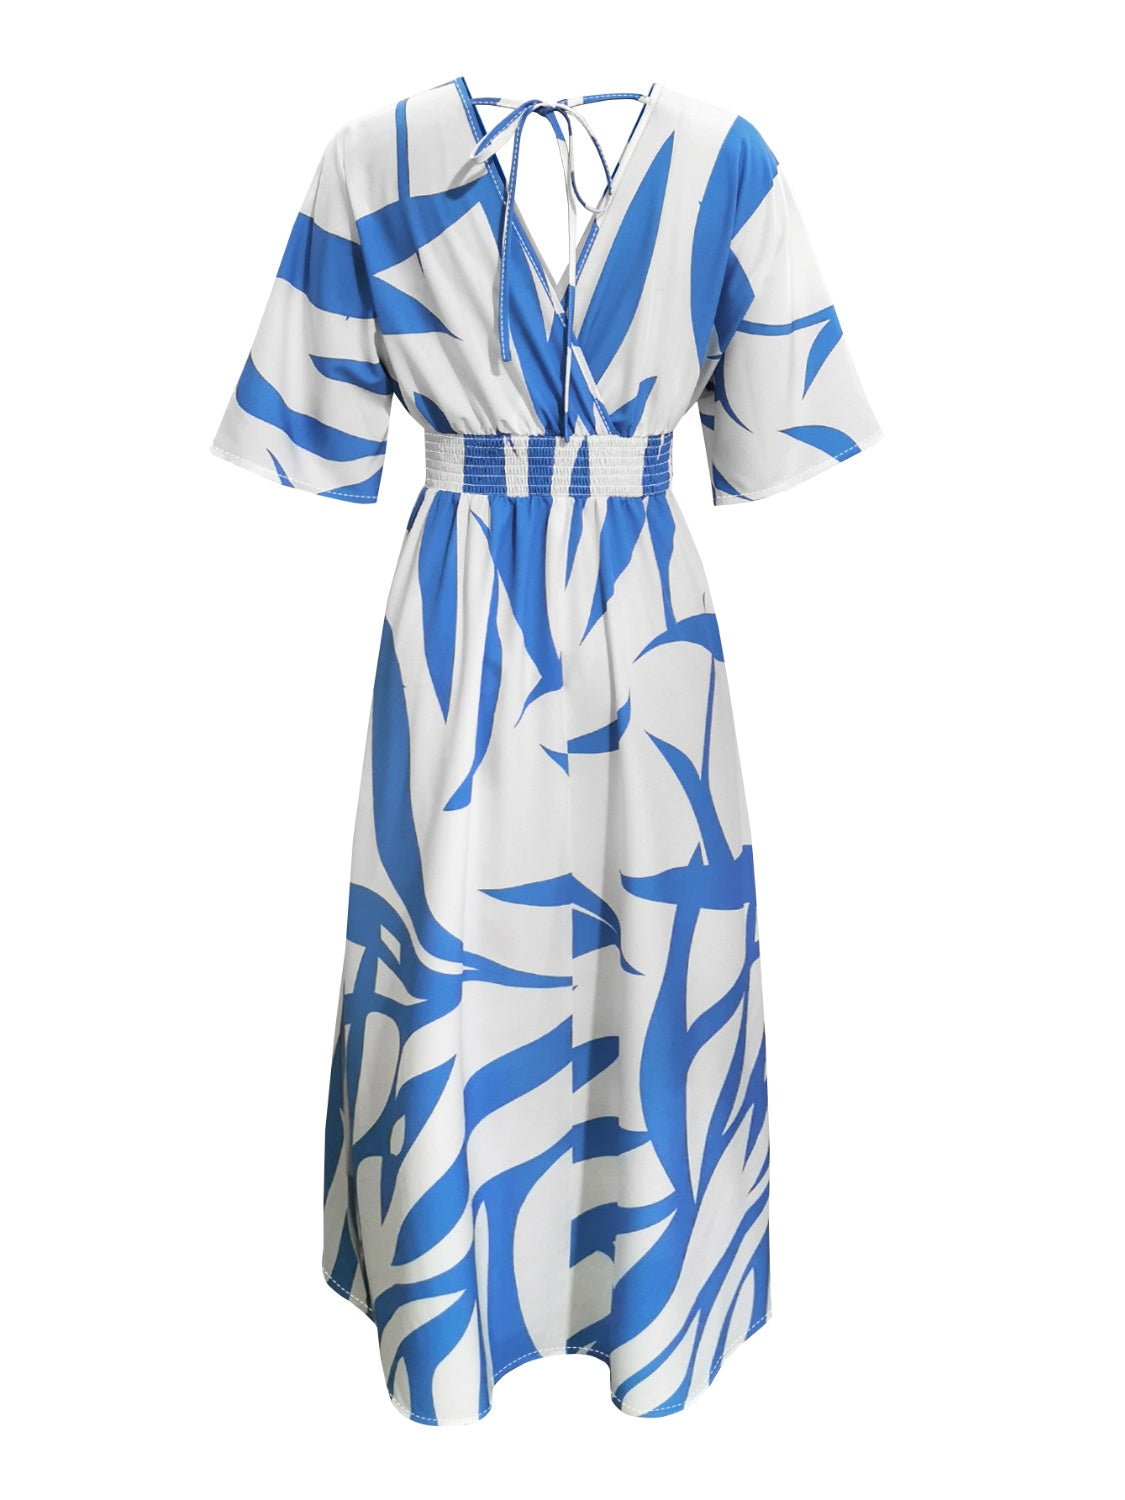 Stunning Tropical Slit Maxi Dress